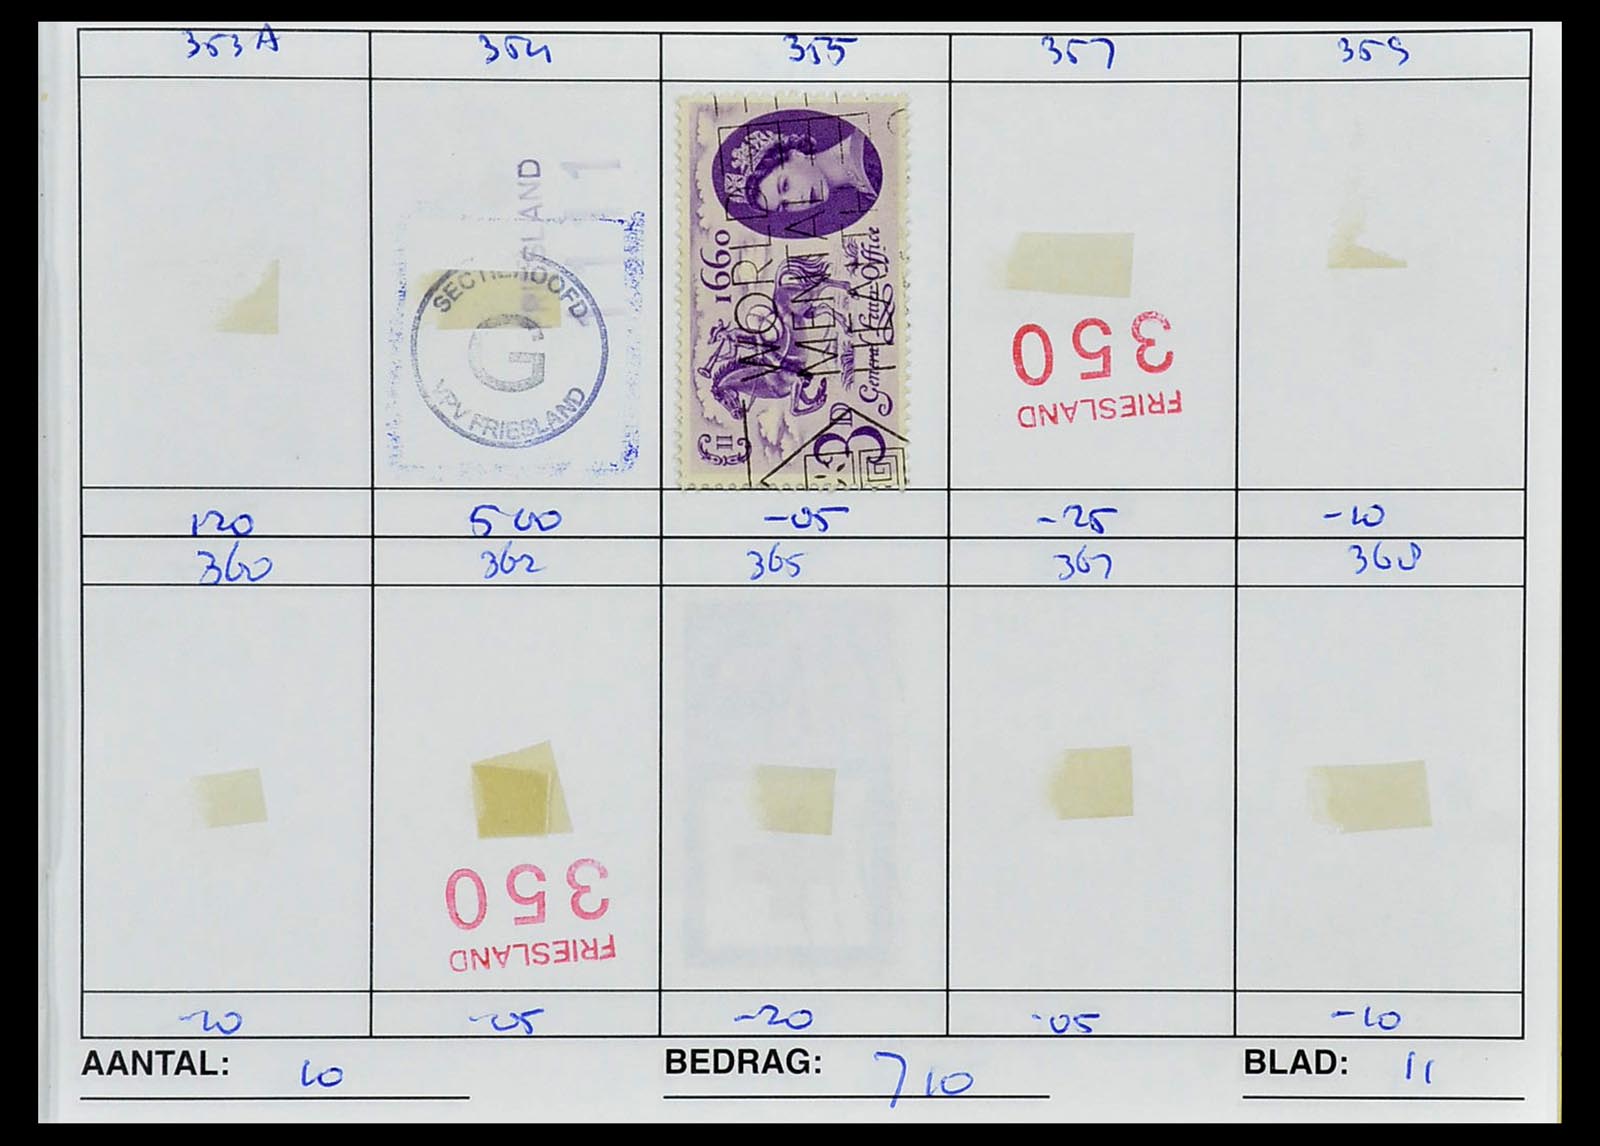 34612 0049 - Stamp Collection 34612 Wereld rondzendboekjes.